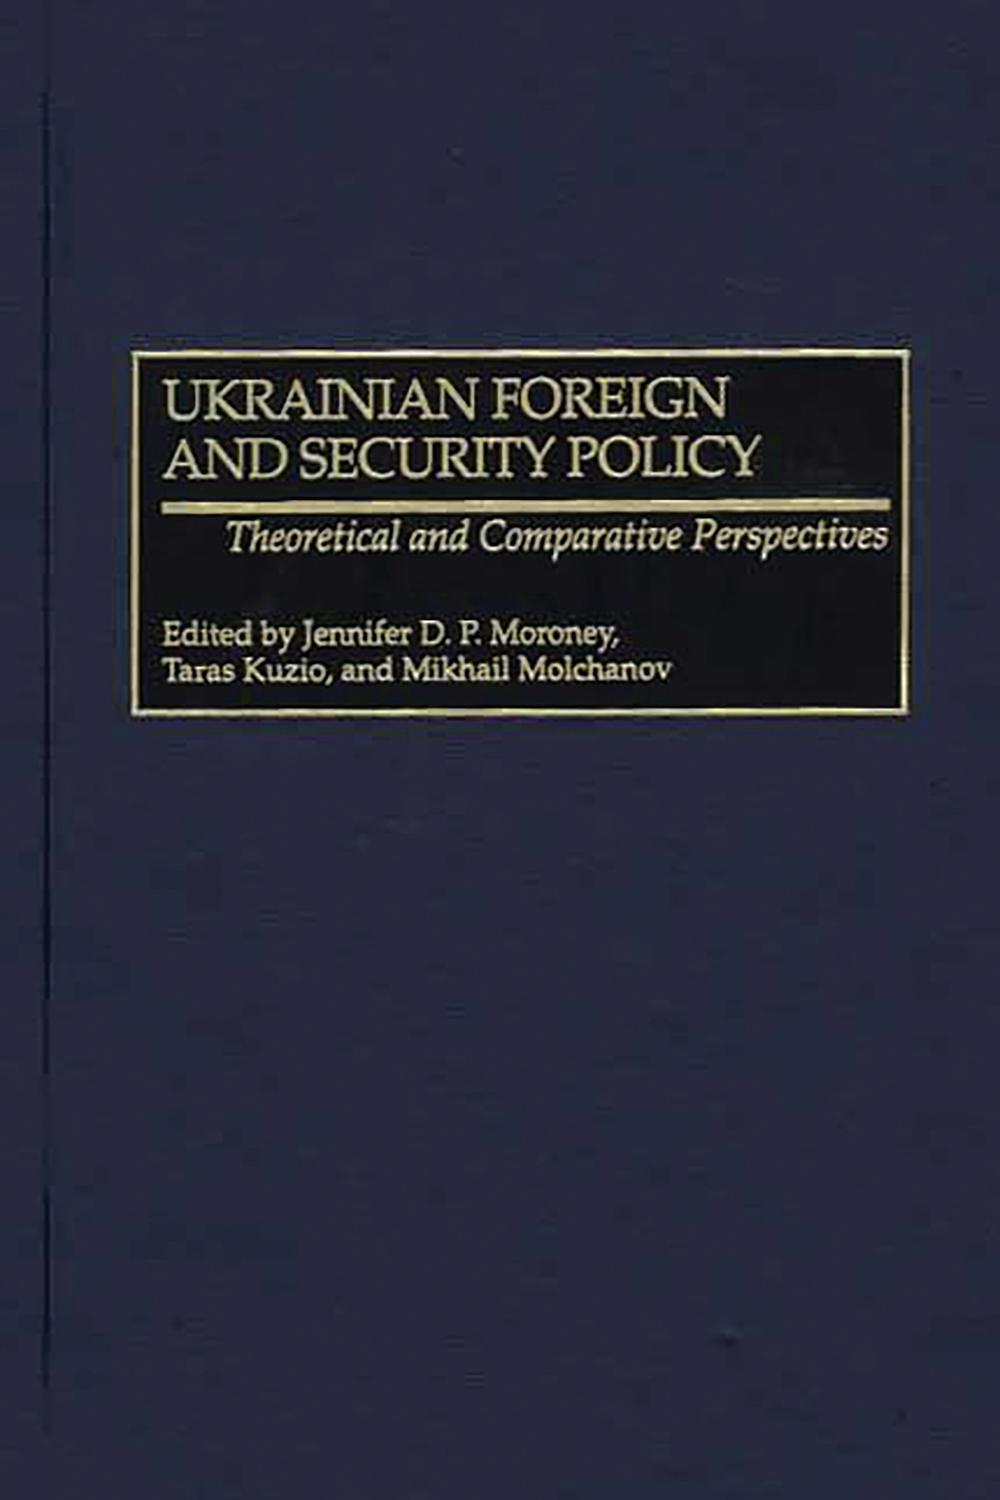 Ukrainian Foreign and Security Policy - Jennifer D.P. Moroney, Taras Kuzio, Mikhail A. Molchanov